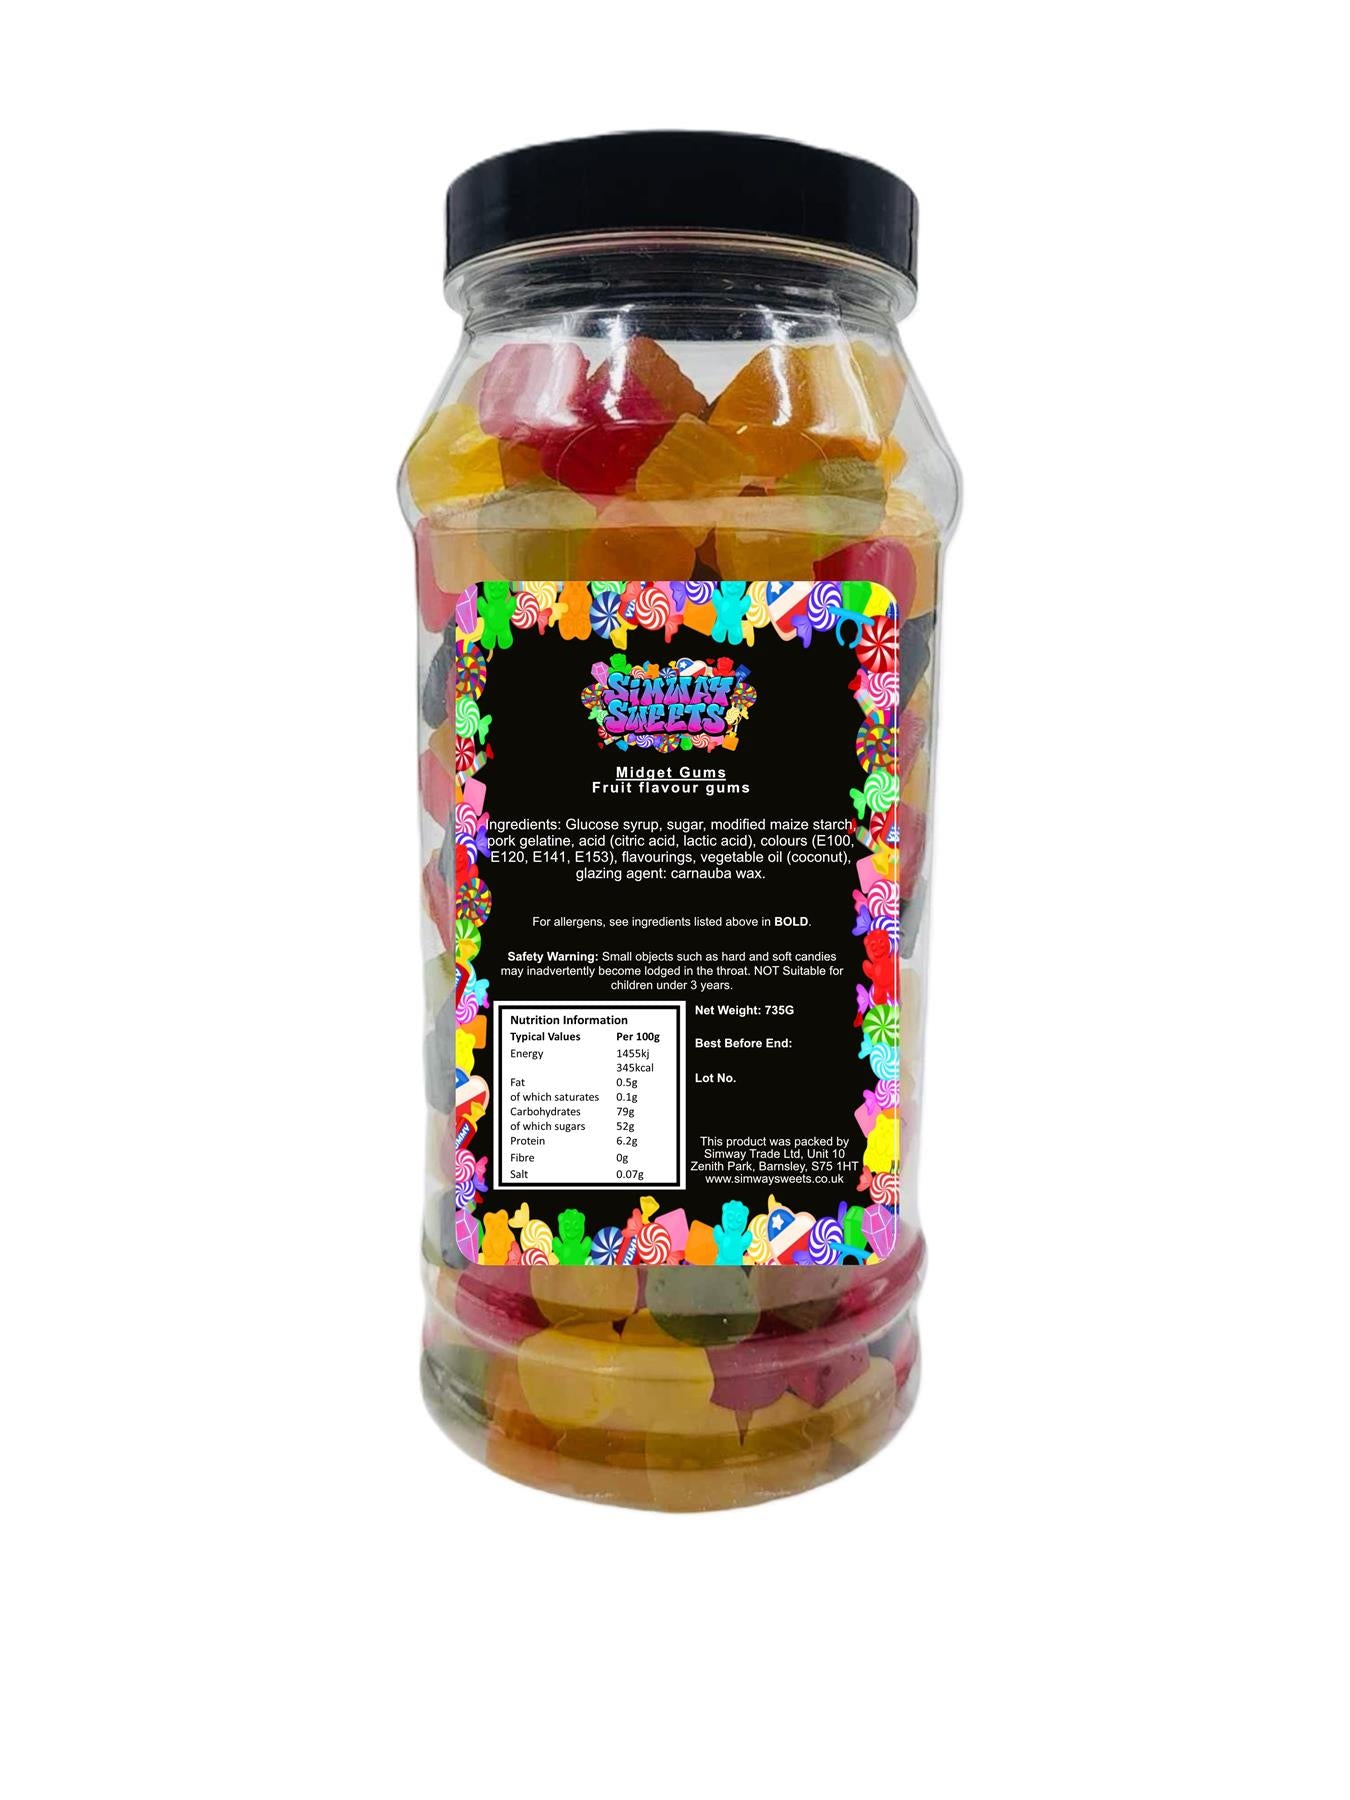 Midget Gum Gems Jelly Gummy Retro Sweets Gift Jar - 735g